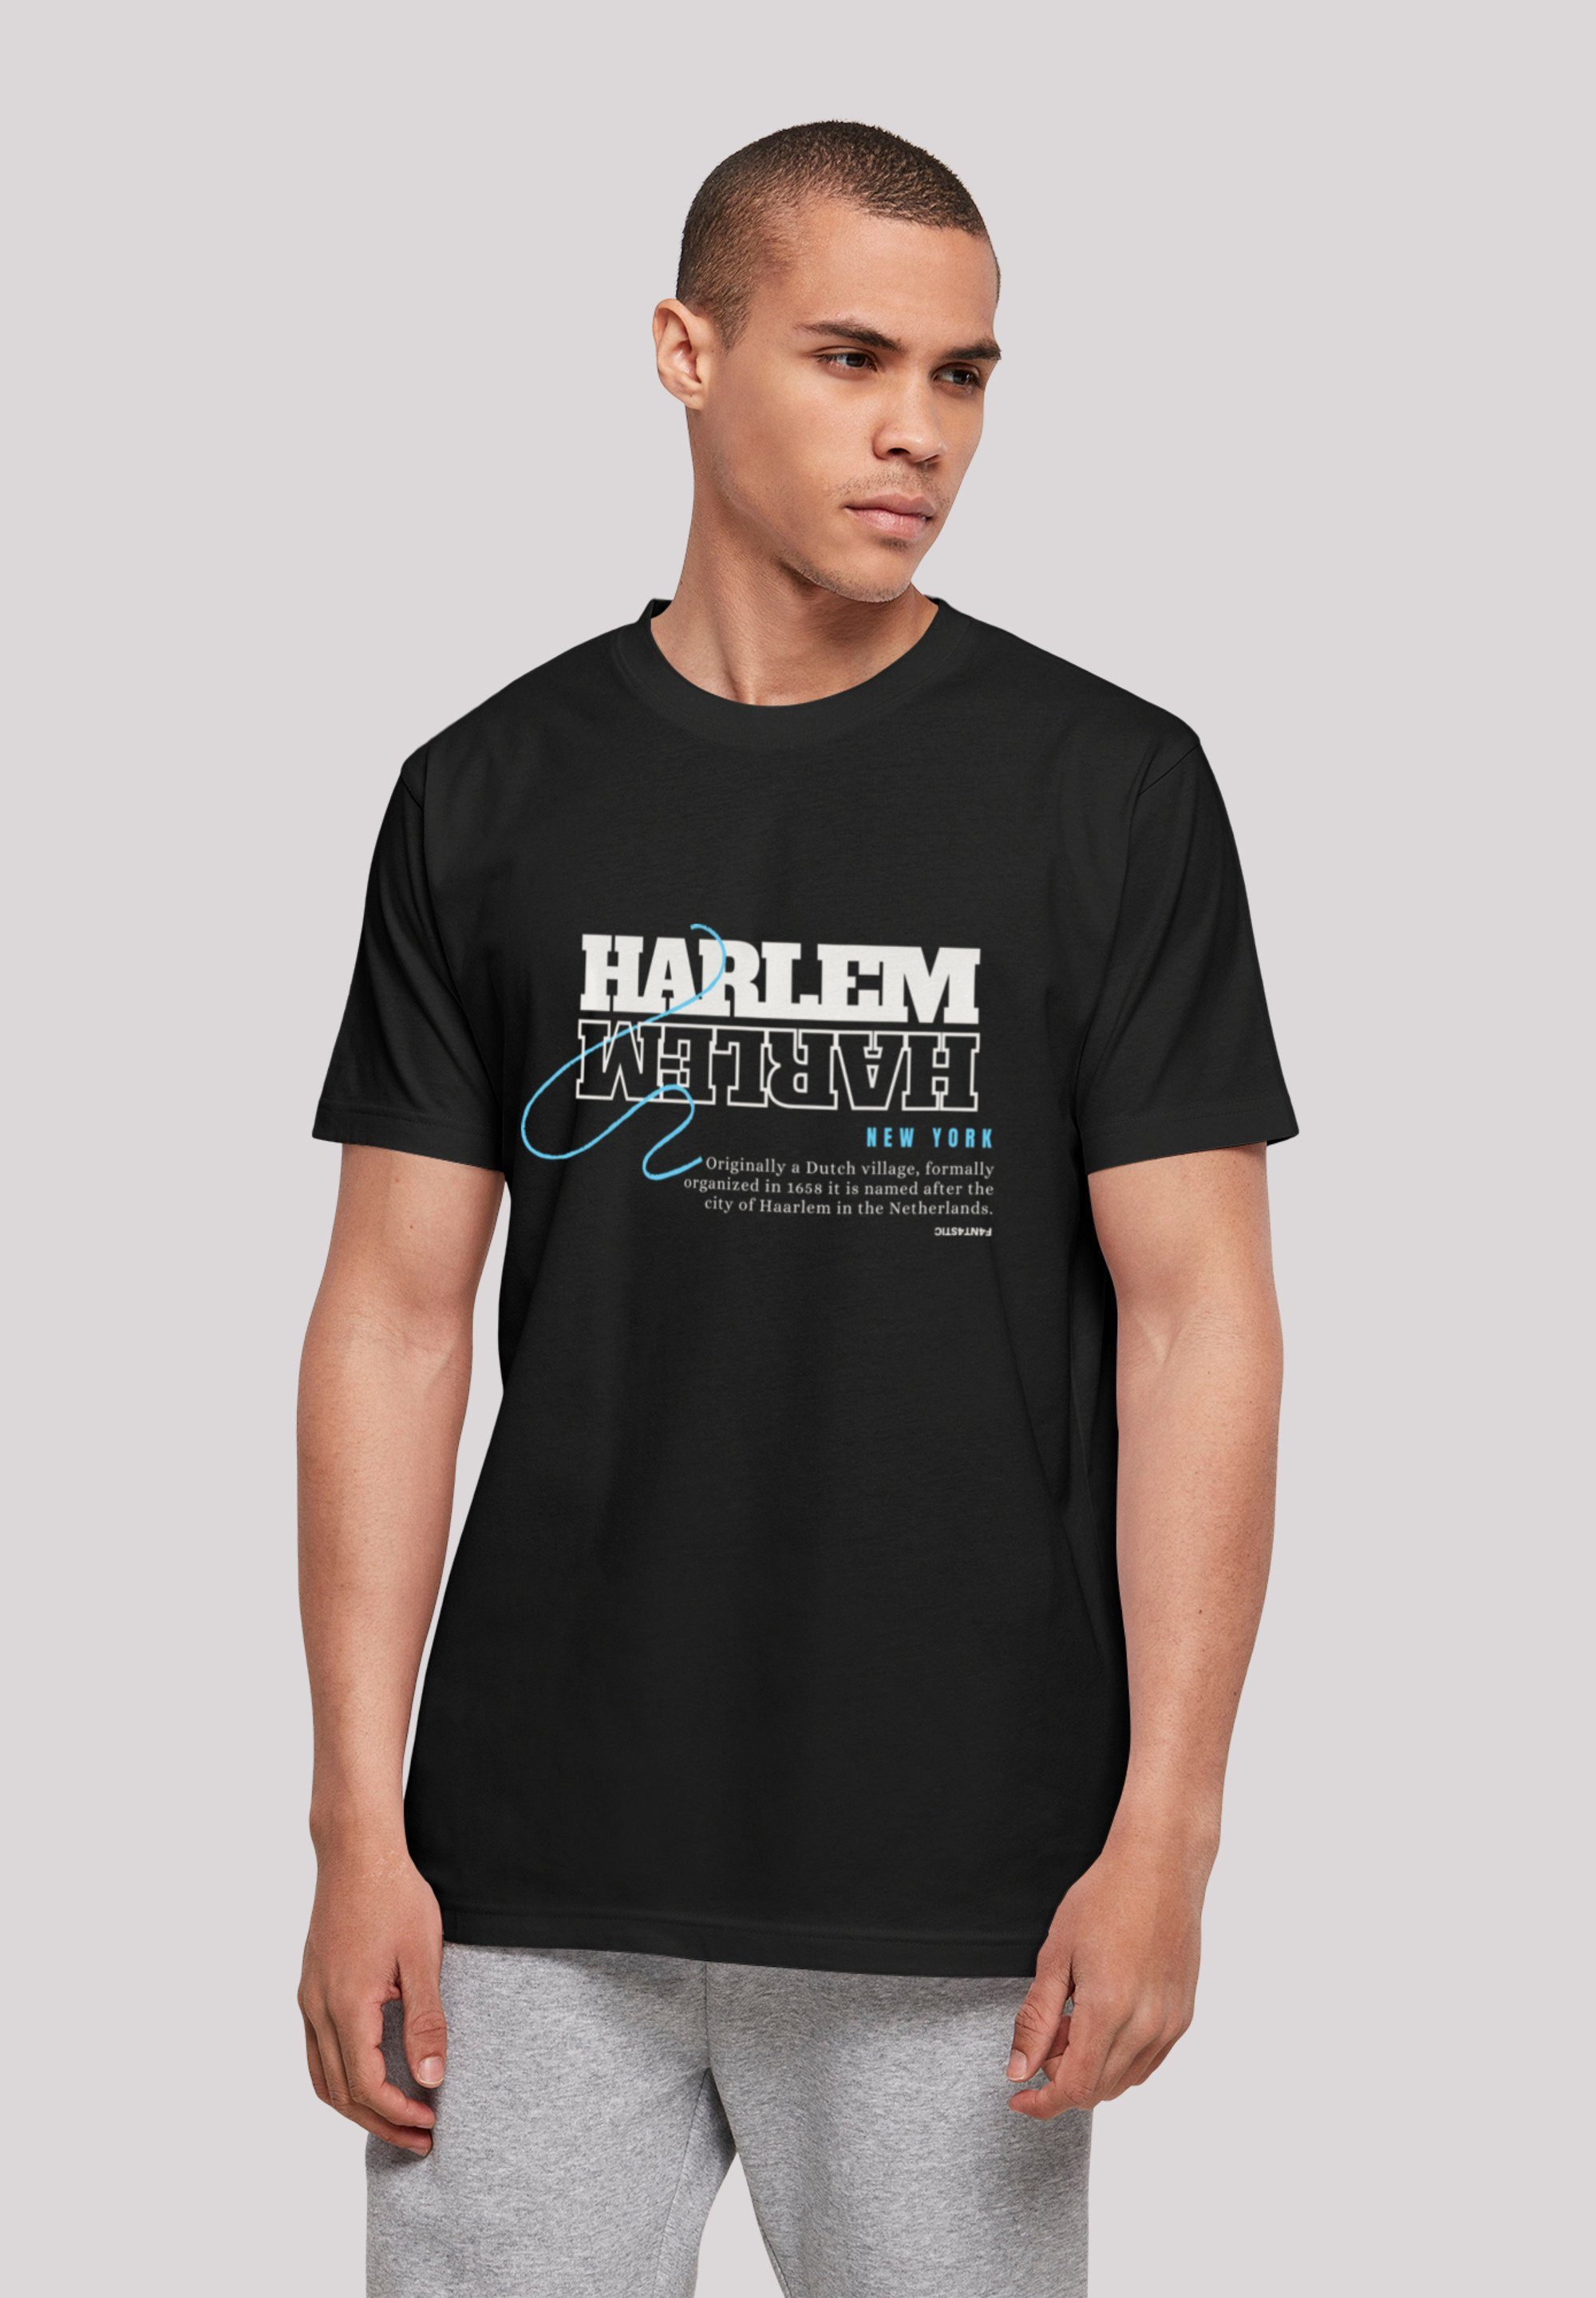 UNISEX F4NT4STIC Print Harlem schwarz T-Shirt TEE